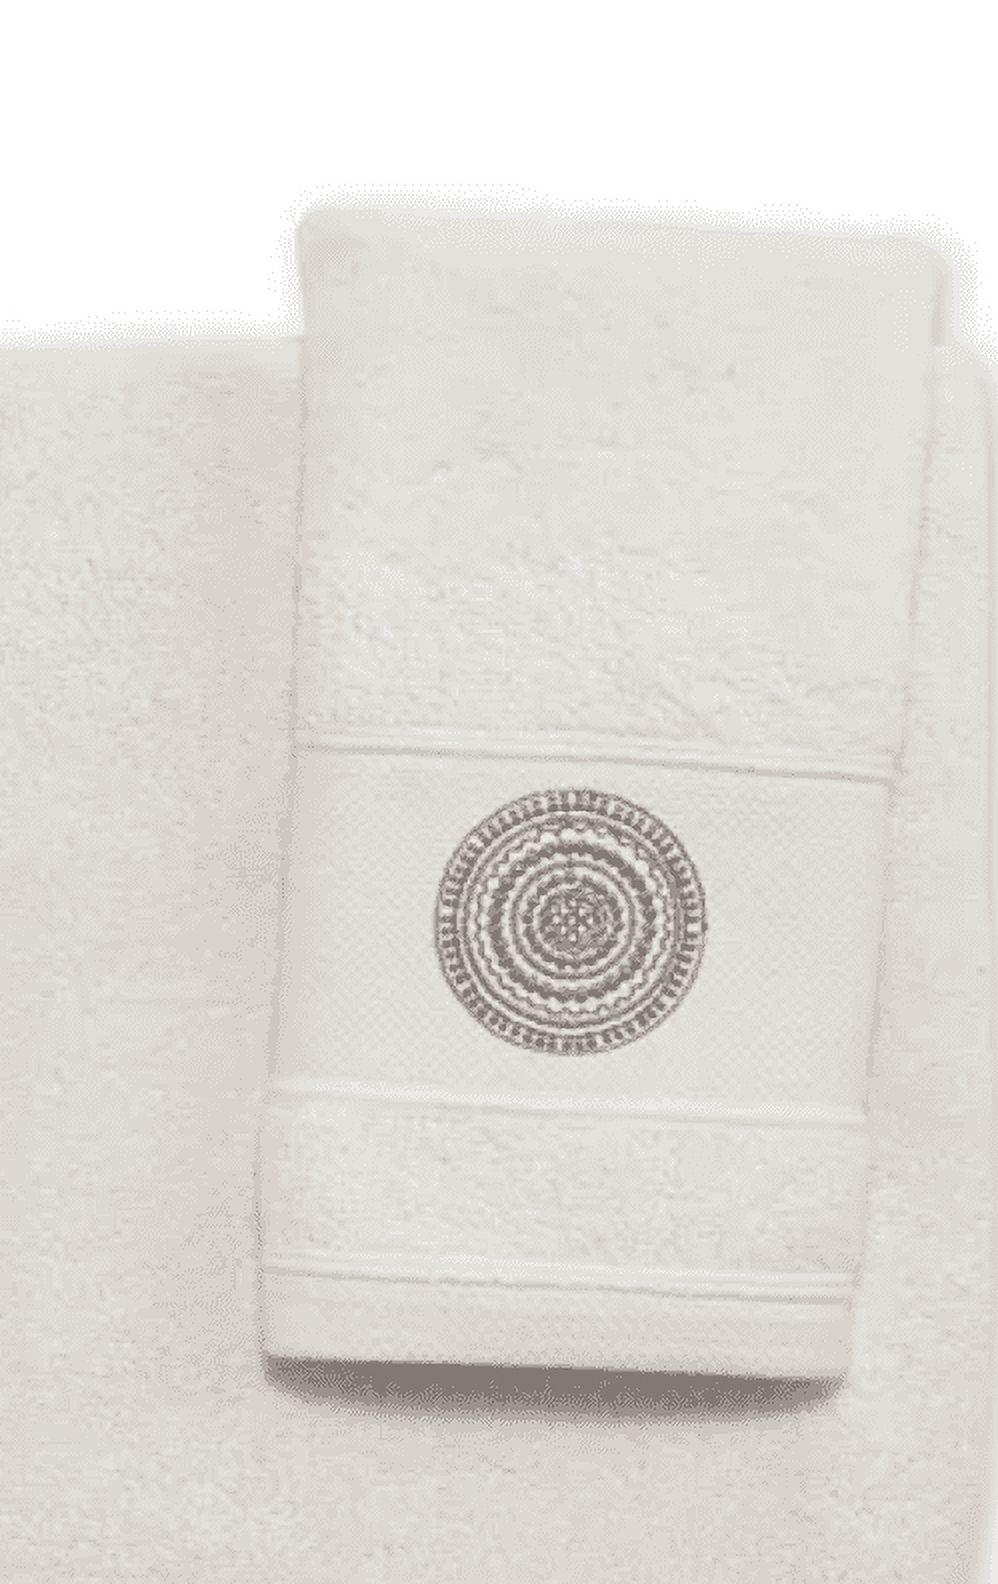 Avanti Emmeline Cotton Embroidered Medallion 11" x 18" Fingertip Towel - Cream - image 1 of 2